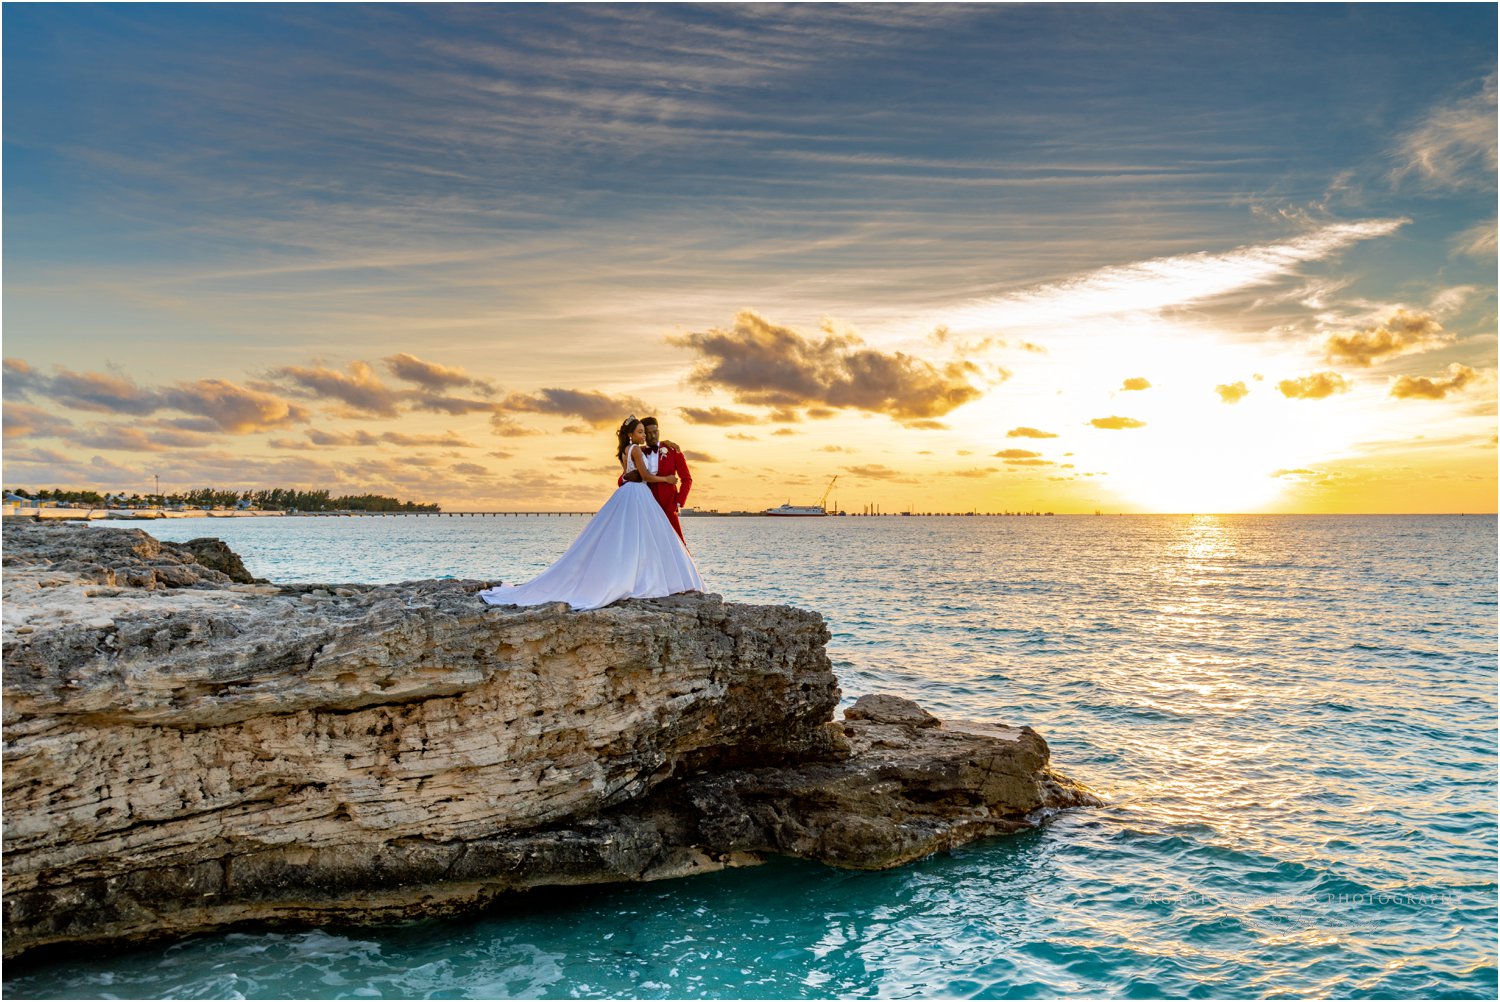 Bahamas Destination Wedding Photographer Organic Moments Photography